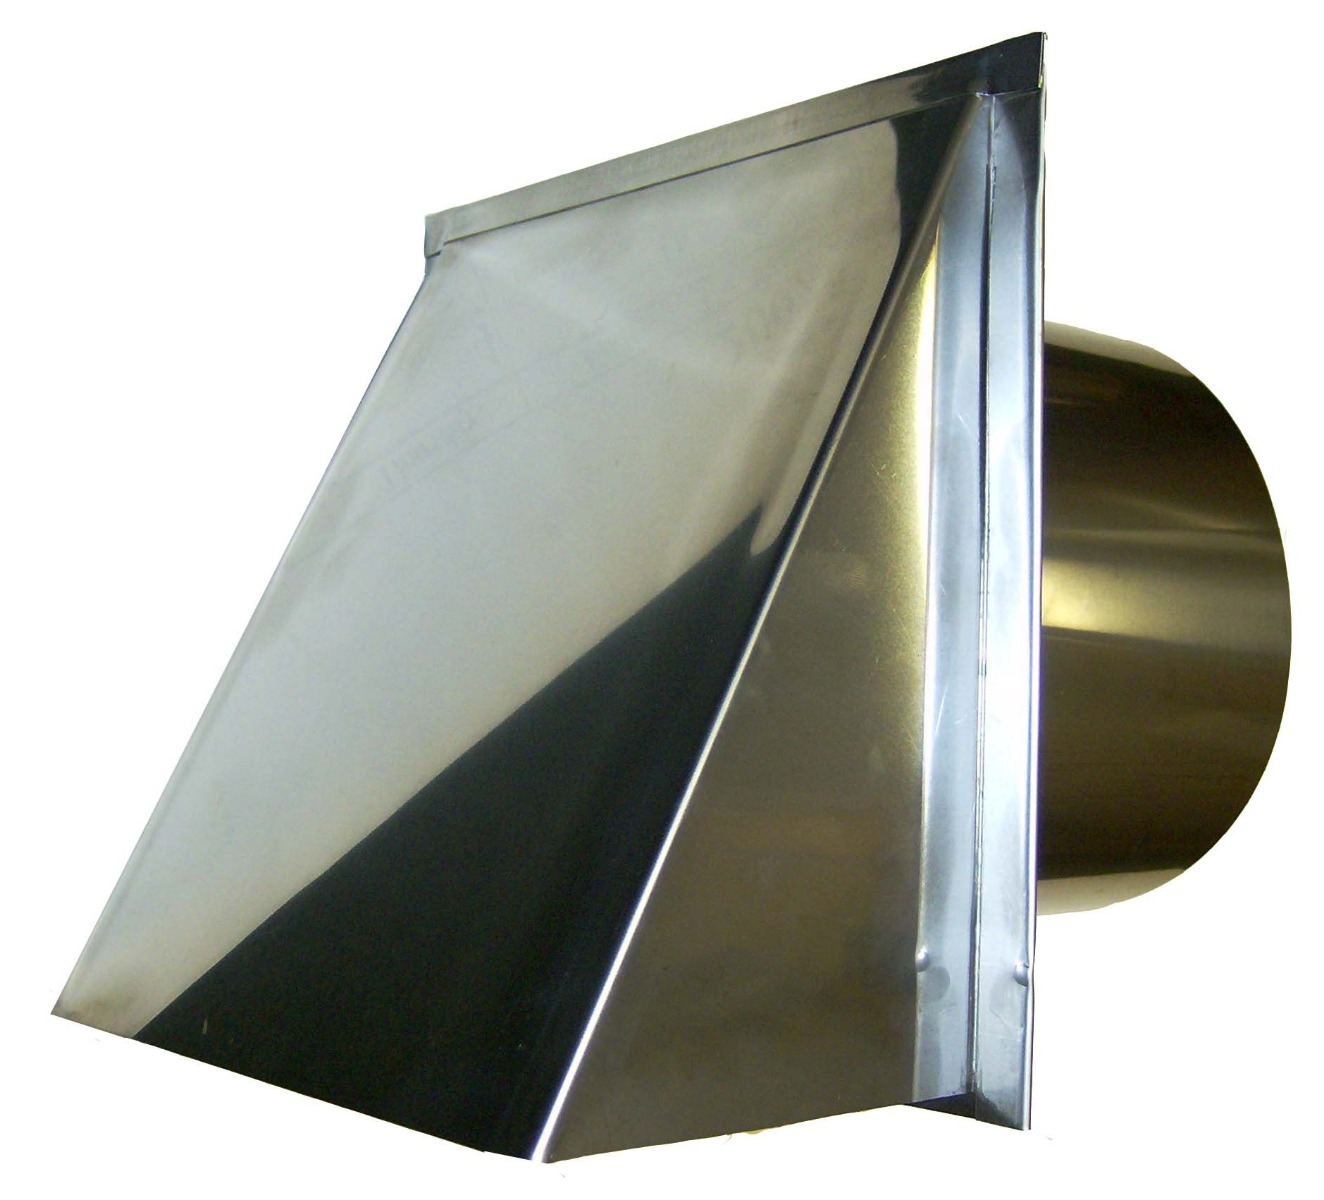 stainless steel range vent